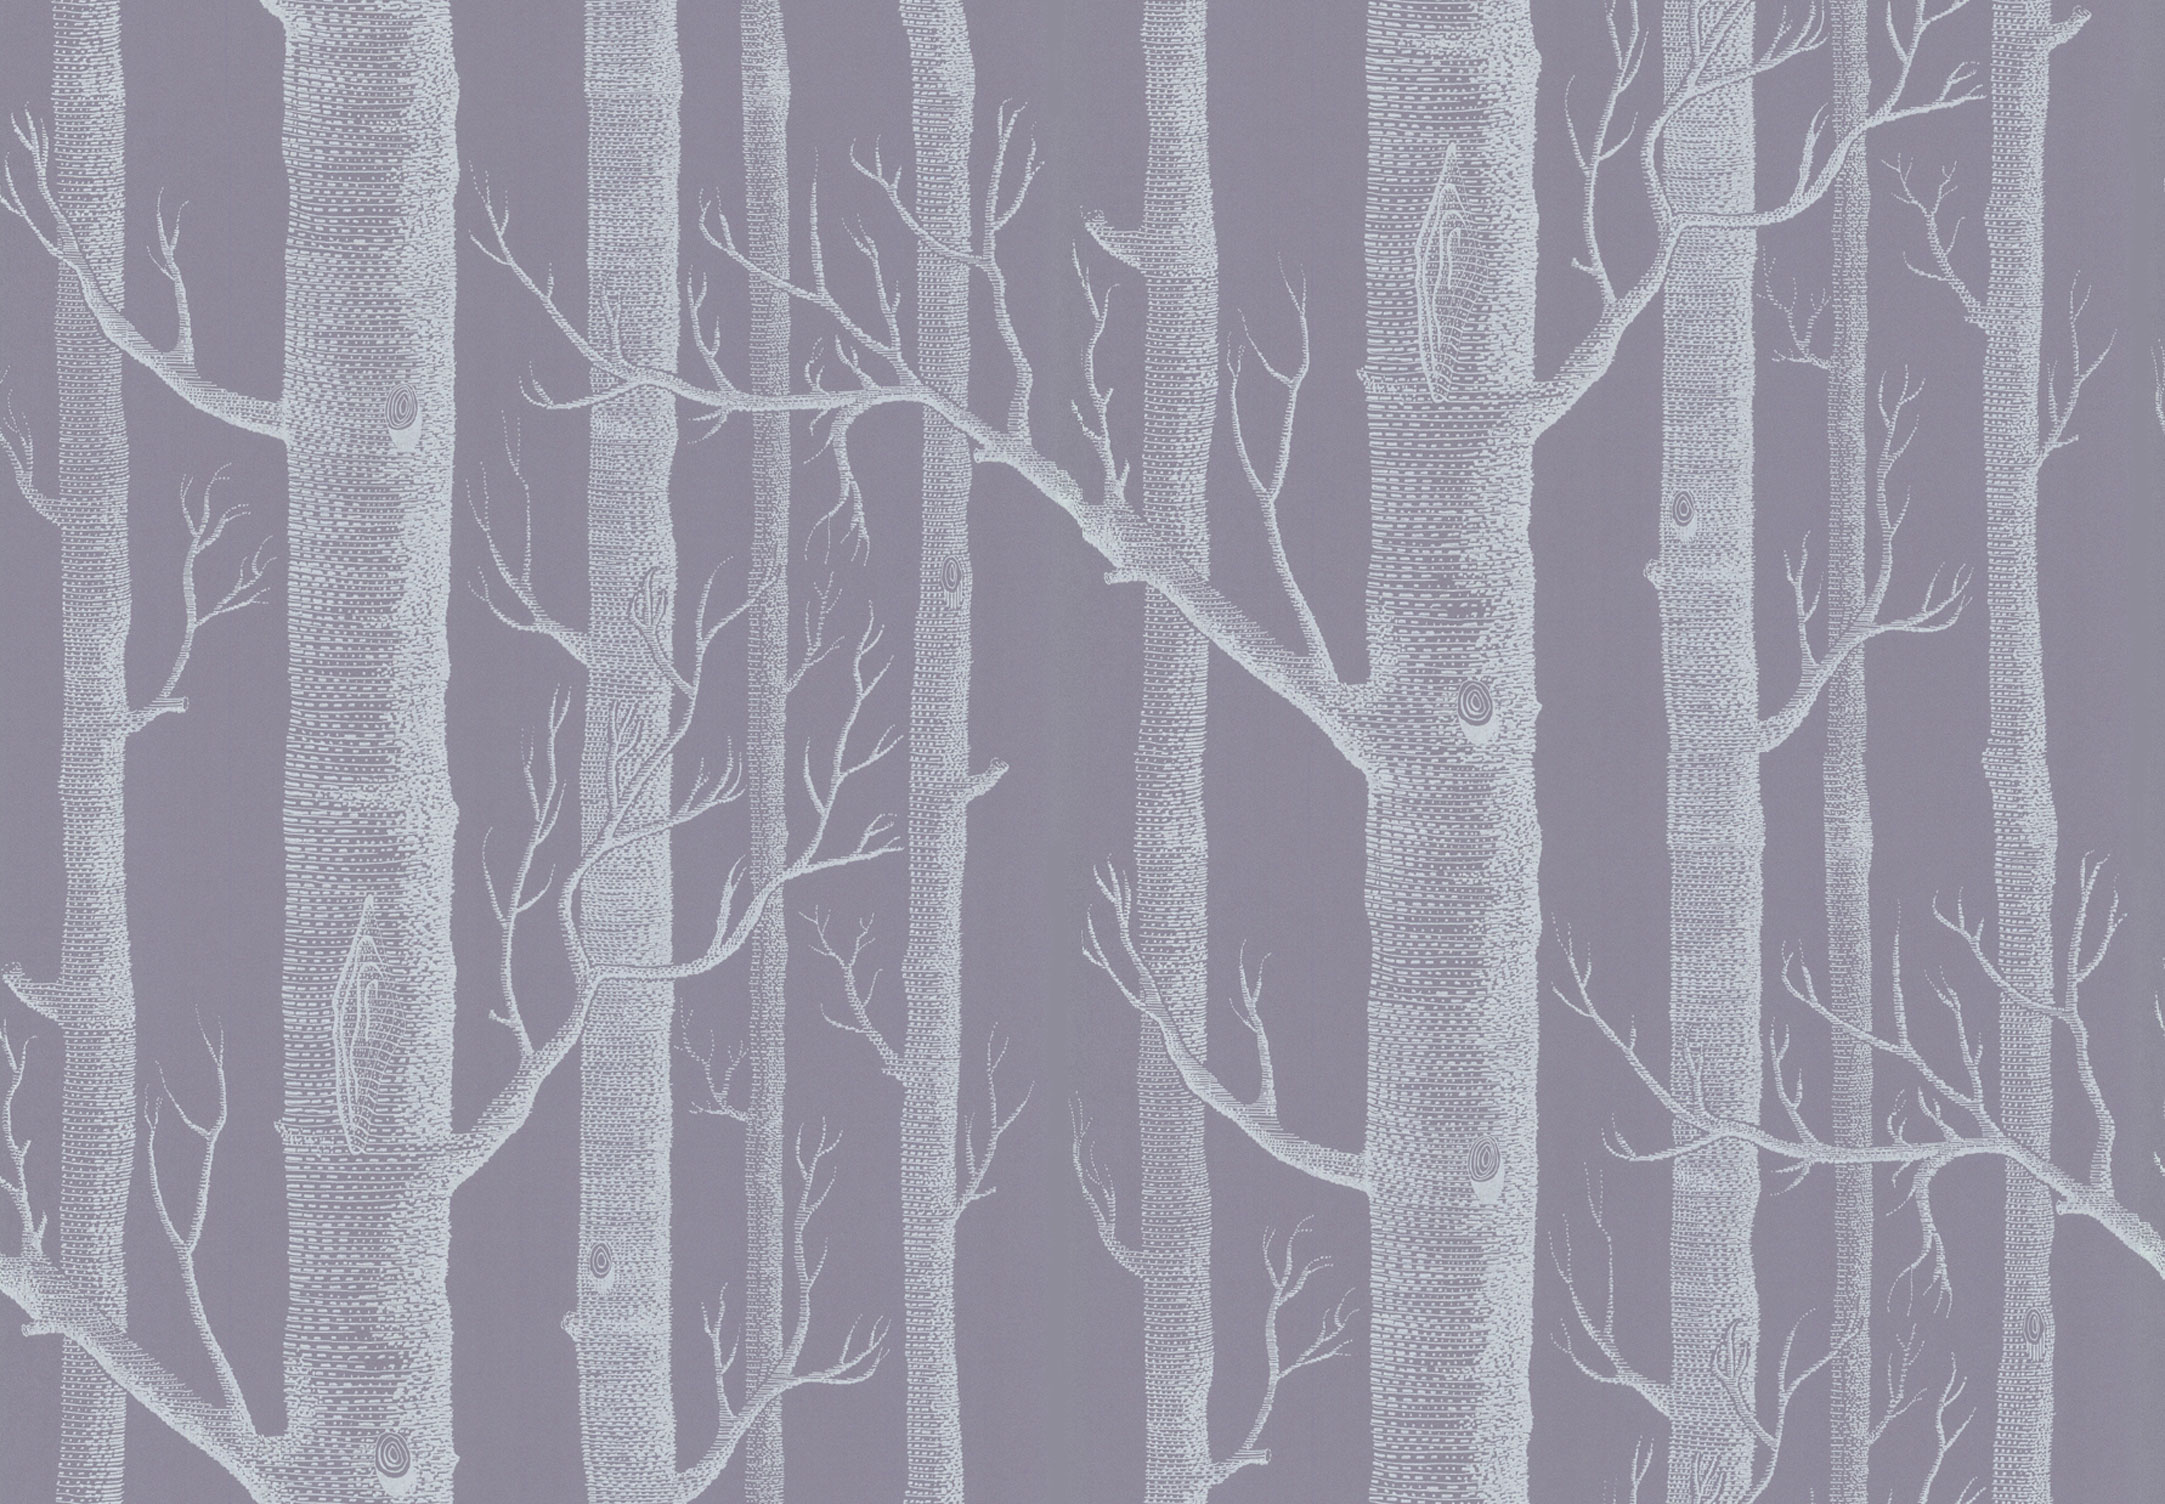 48+] Cole and Sons Birch Tree Wallpaper - WallpaperSafari